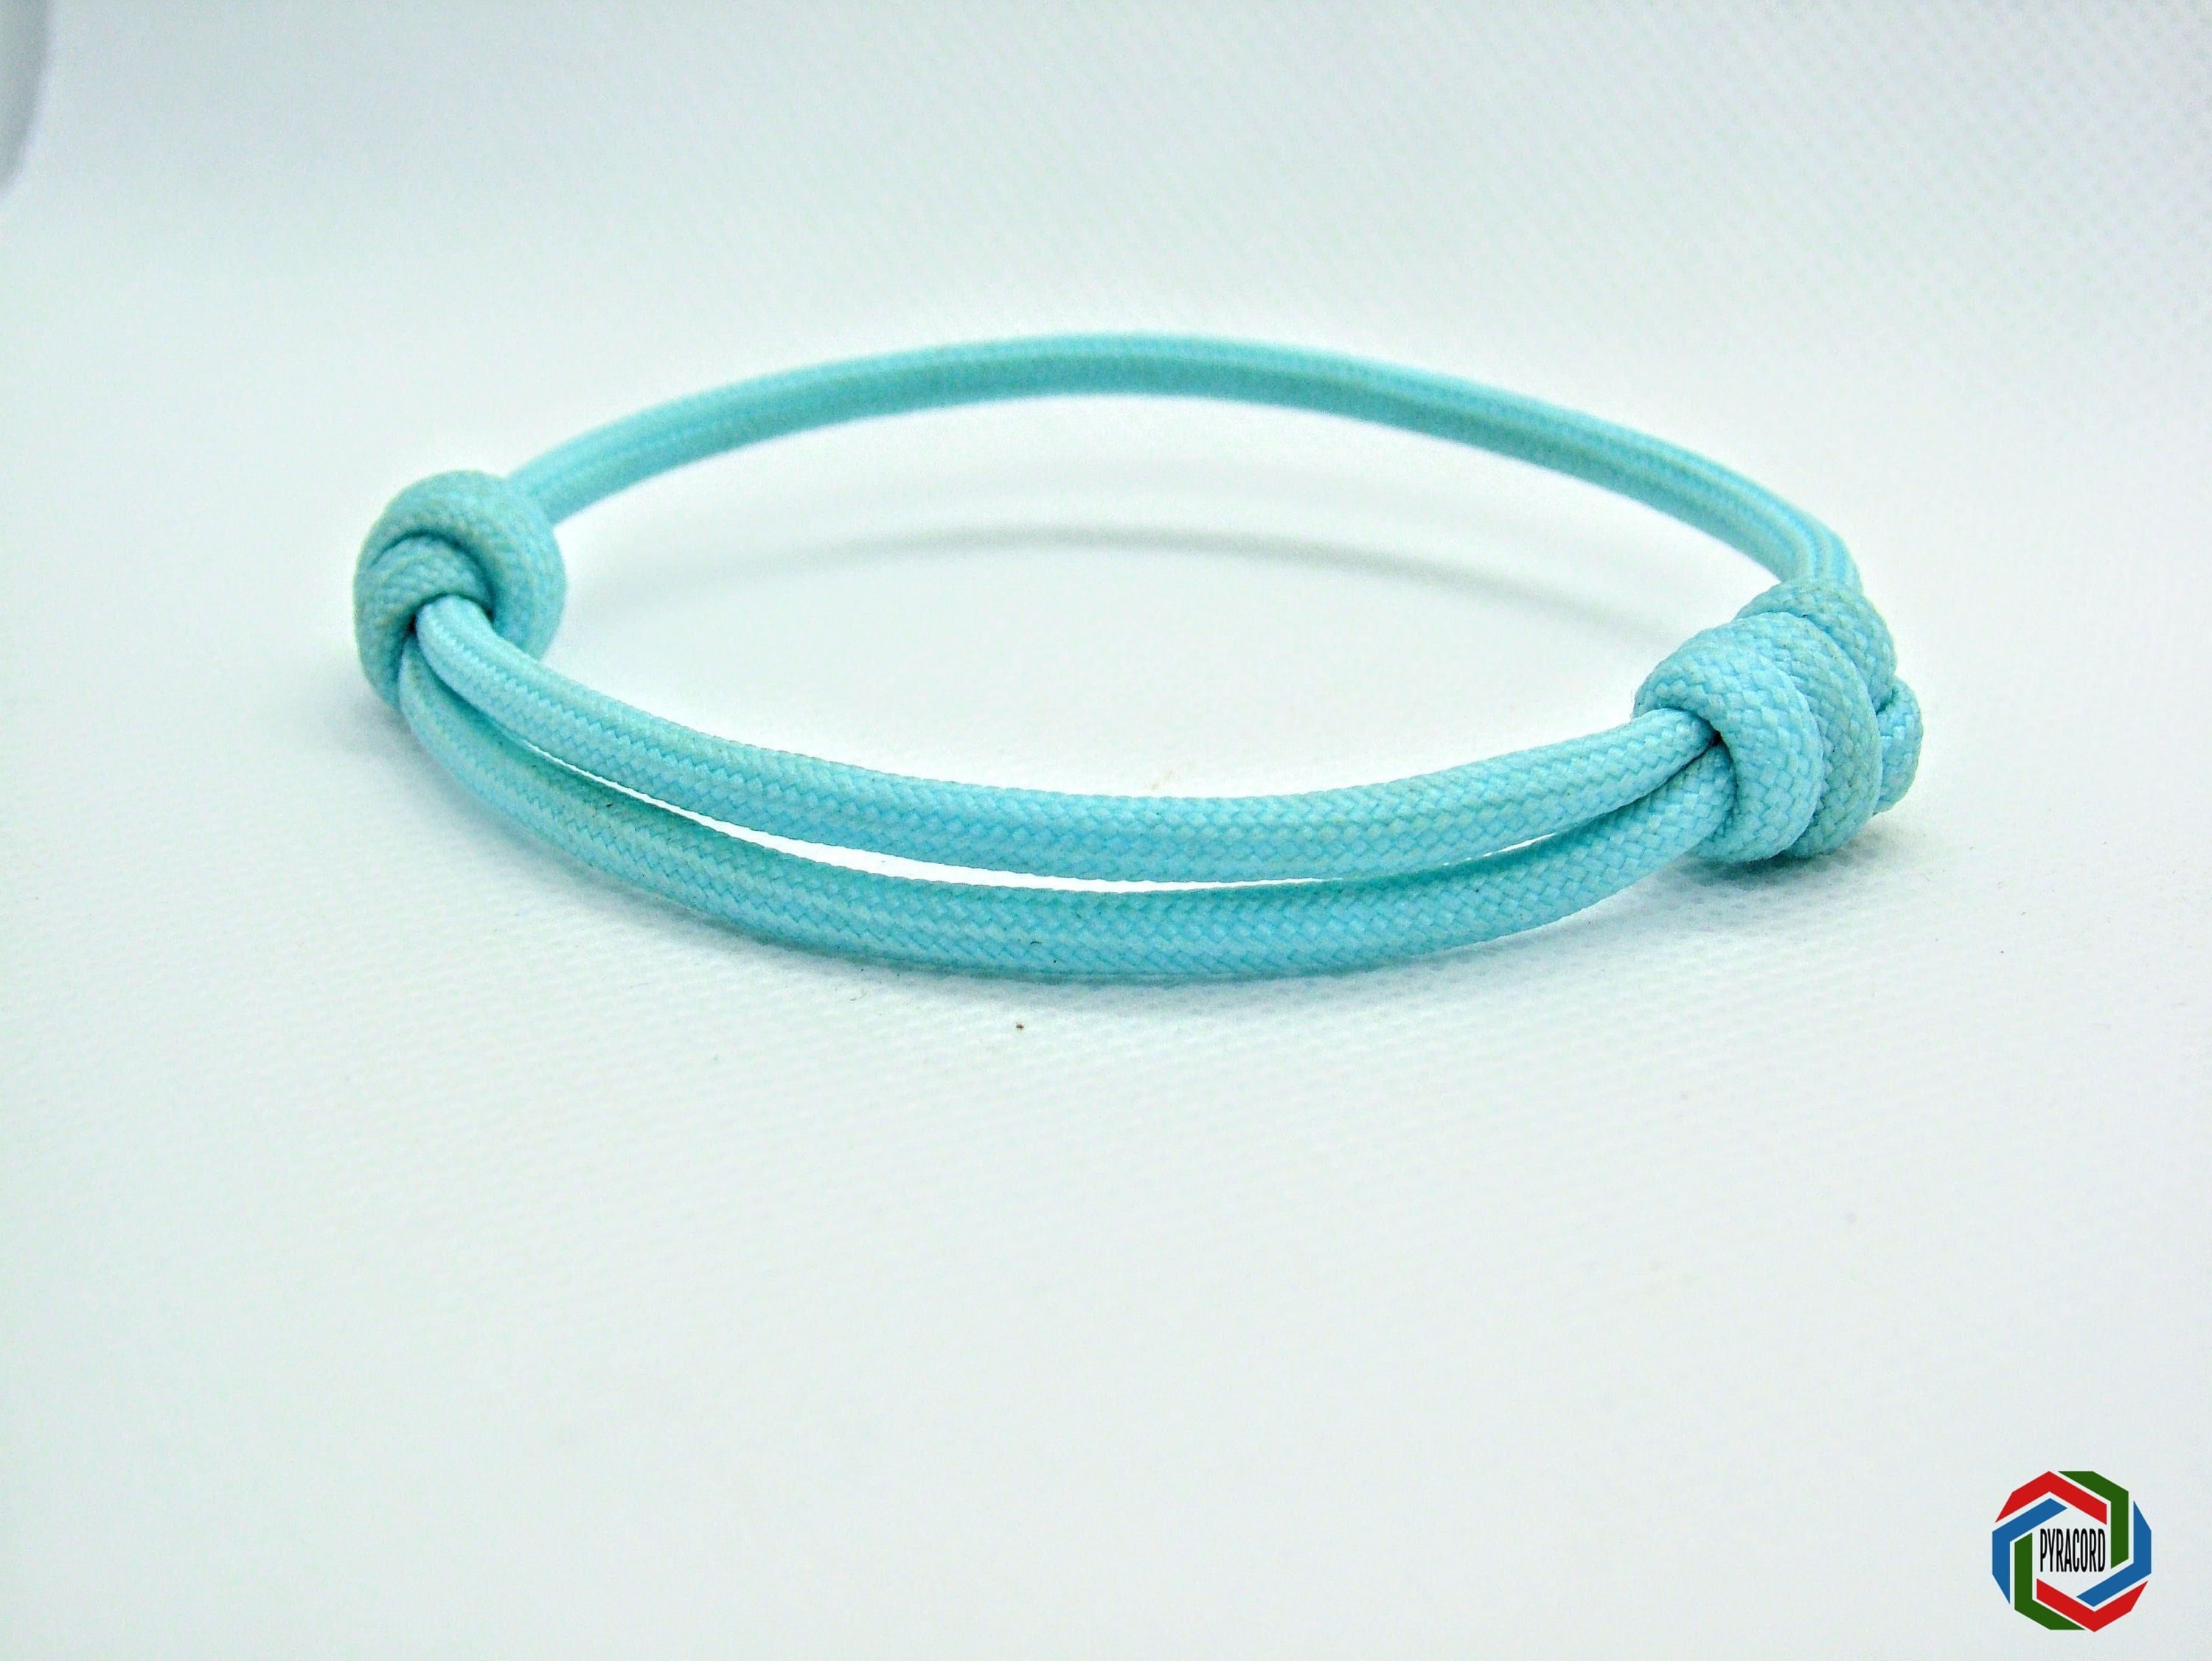 Adjustable paracord bracelet - 2 x sliding knots - YouTube